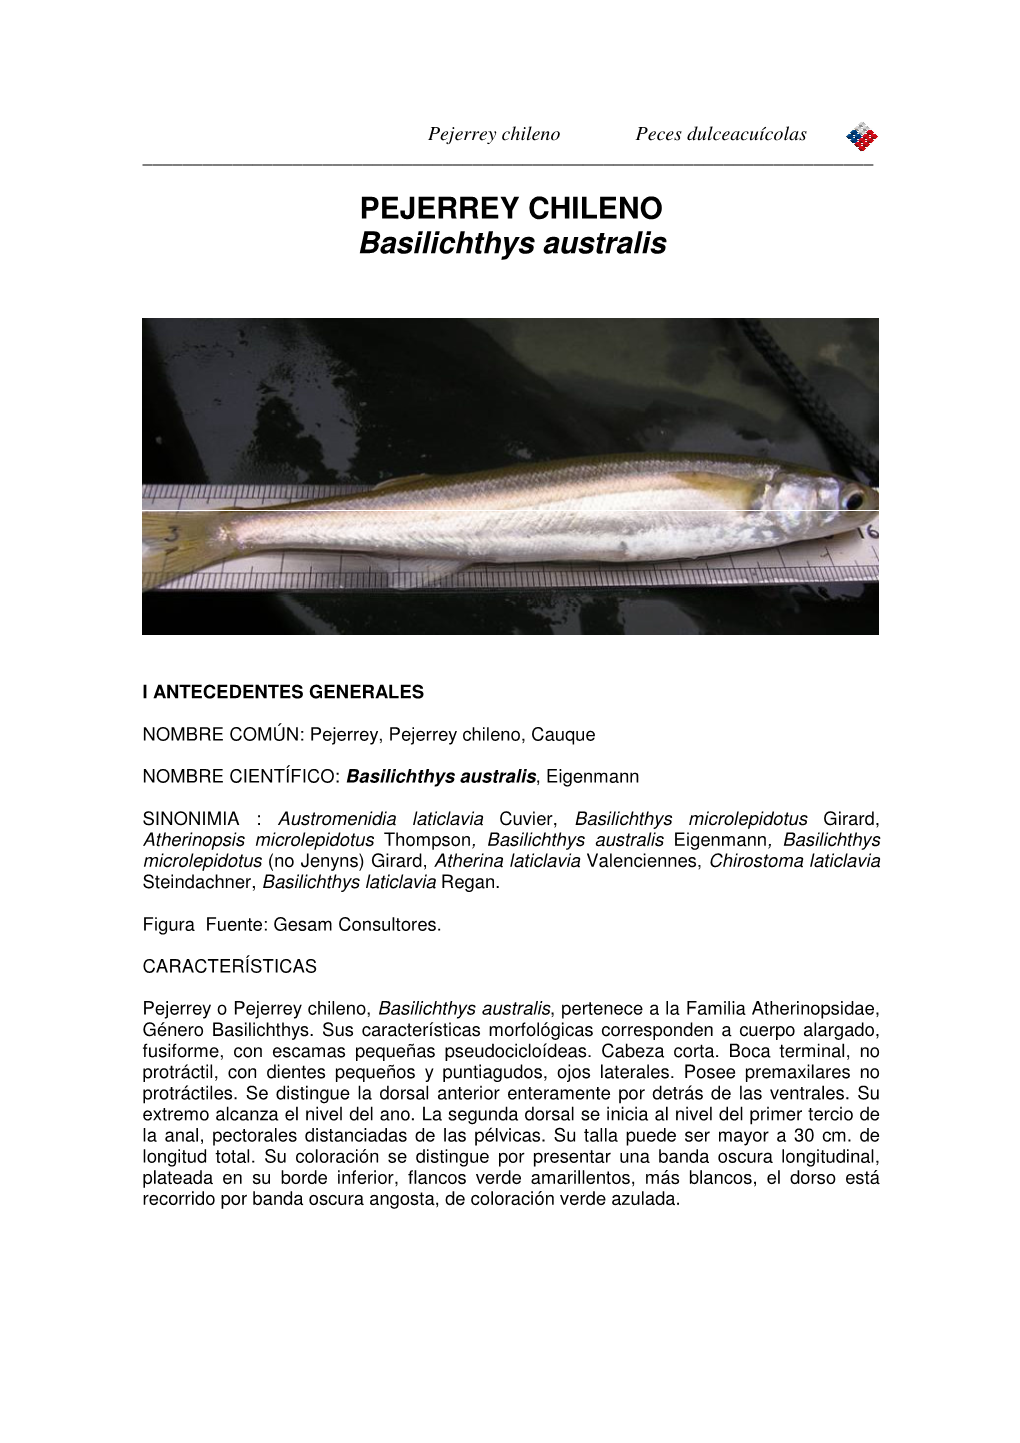 PEJERREY CHILENO Basilichthys Australis